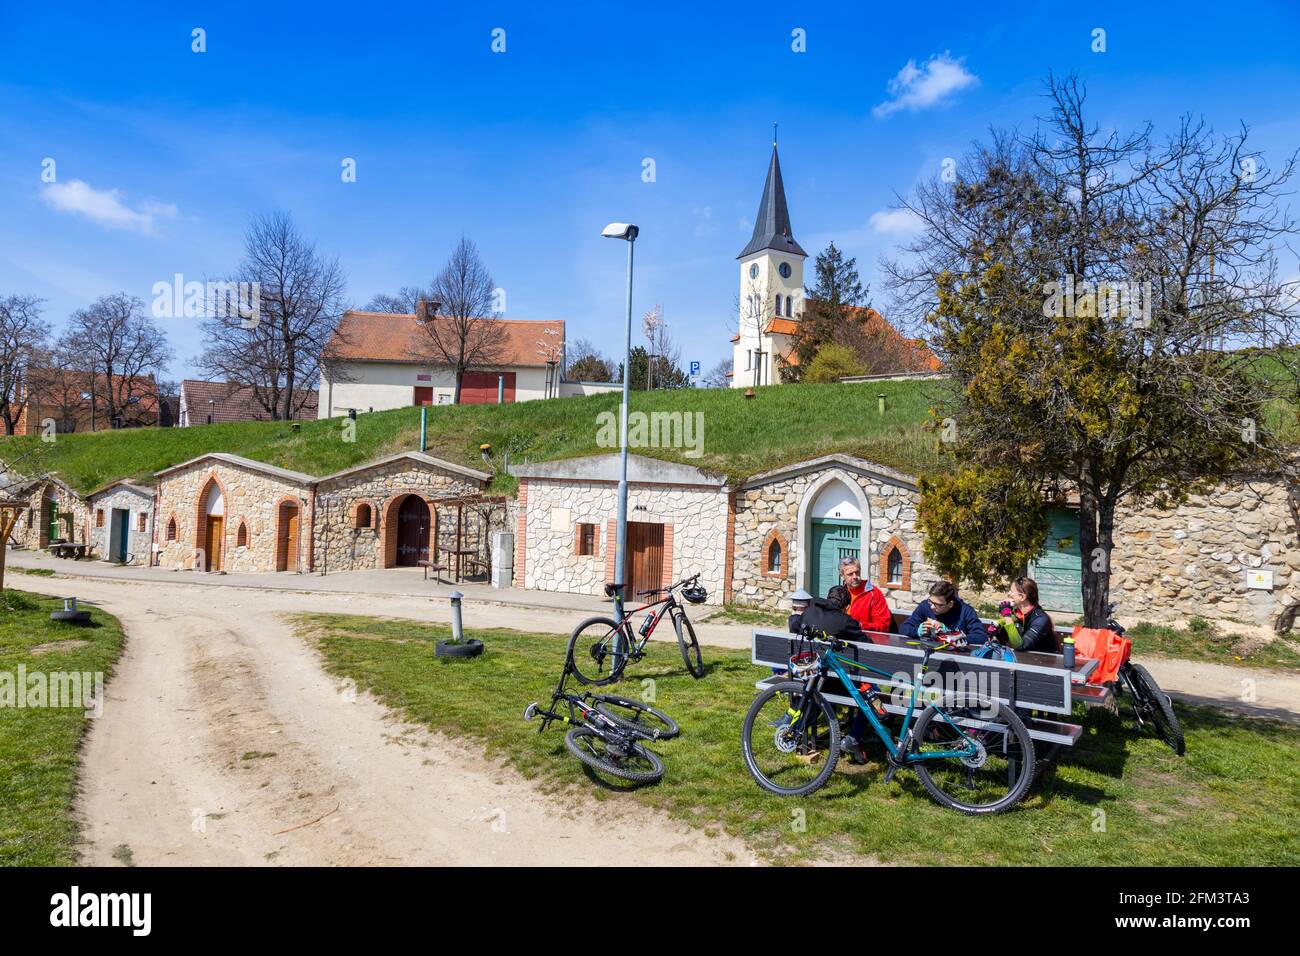 Vinařská obec Vrbice, Slovacko, Morava, Ceska republika / Winery village Vrbice, South Moravia, Czech republic Stock Photo